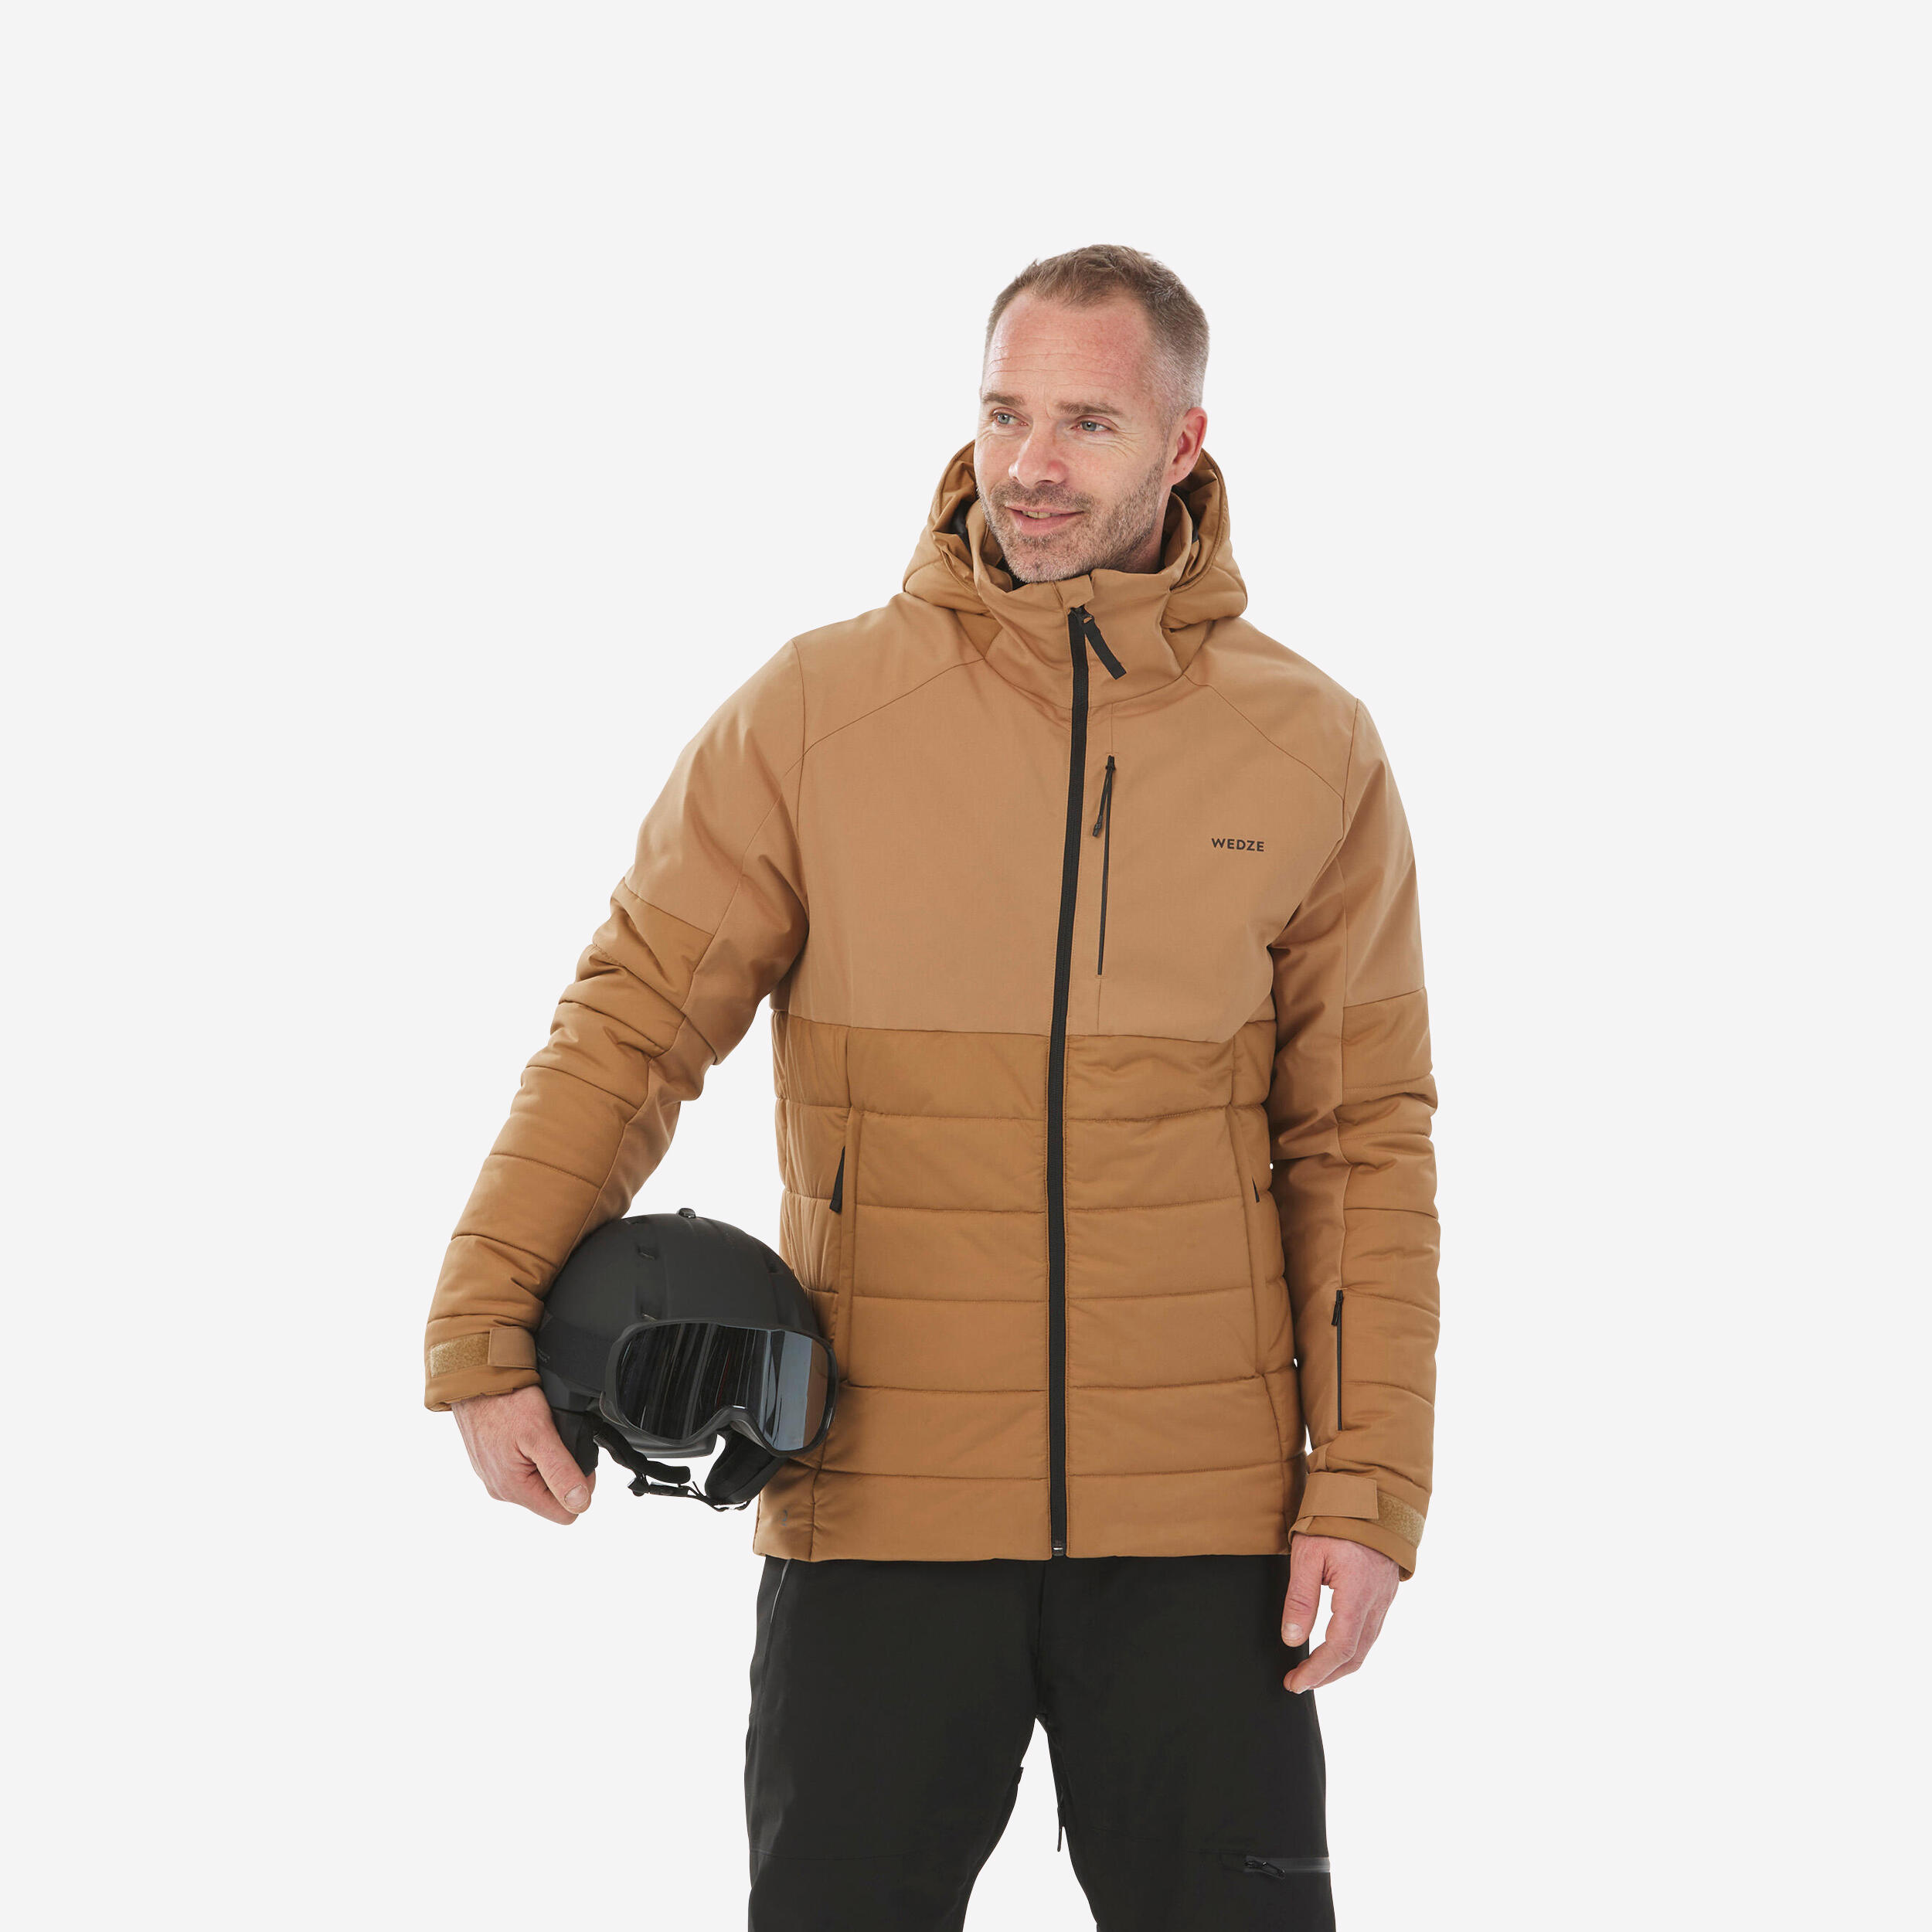 WEDZE Men’s Mid-Length Warm Ski Jacket 100 - Brown